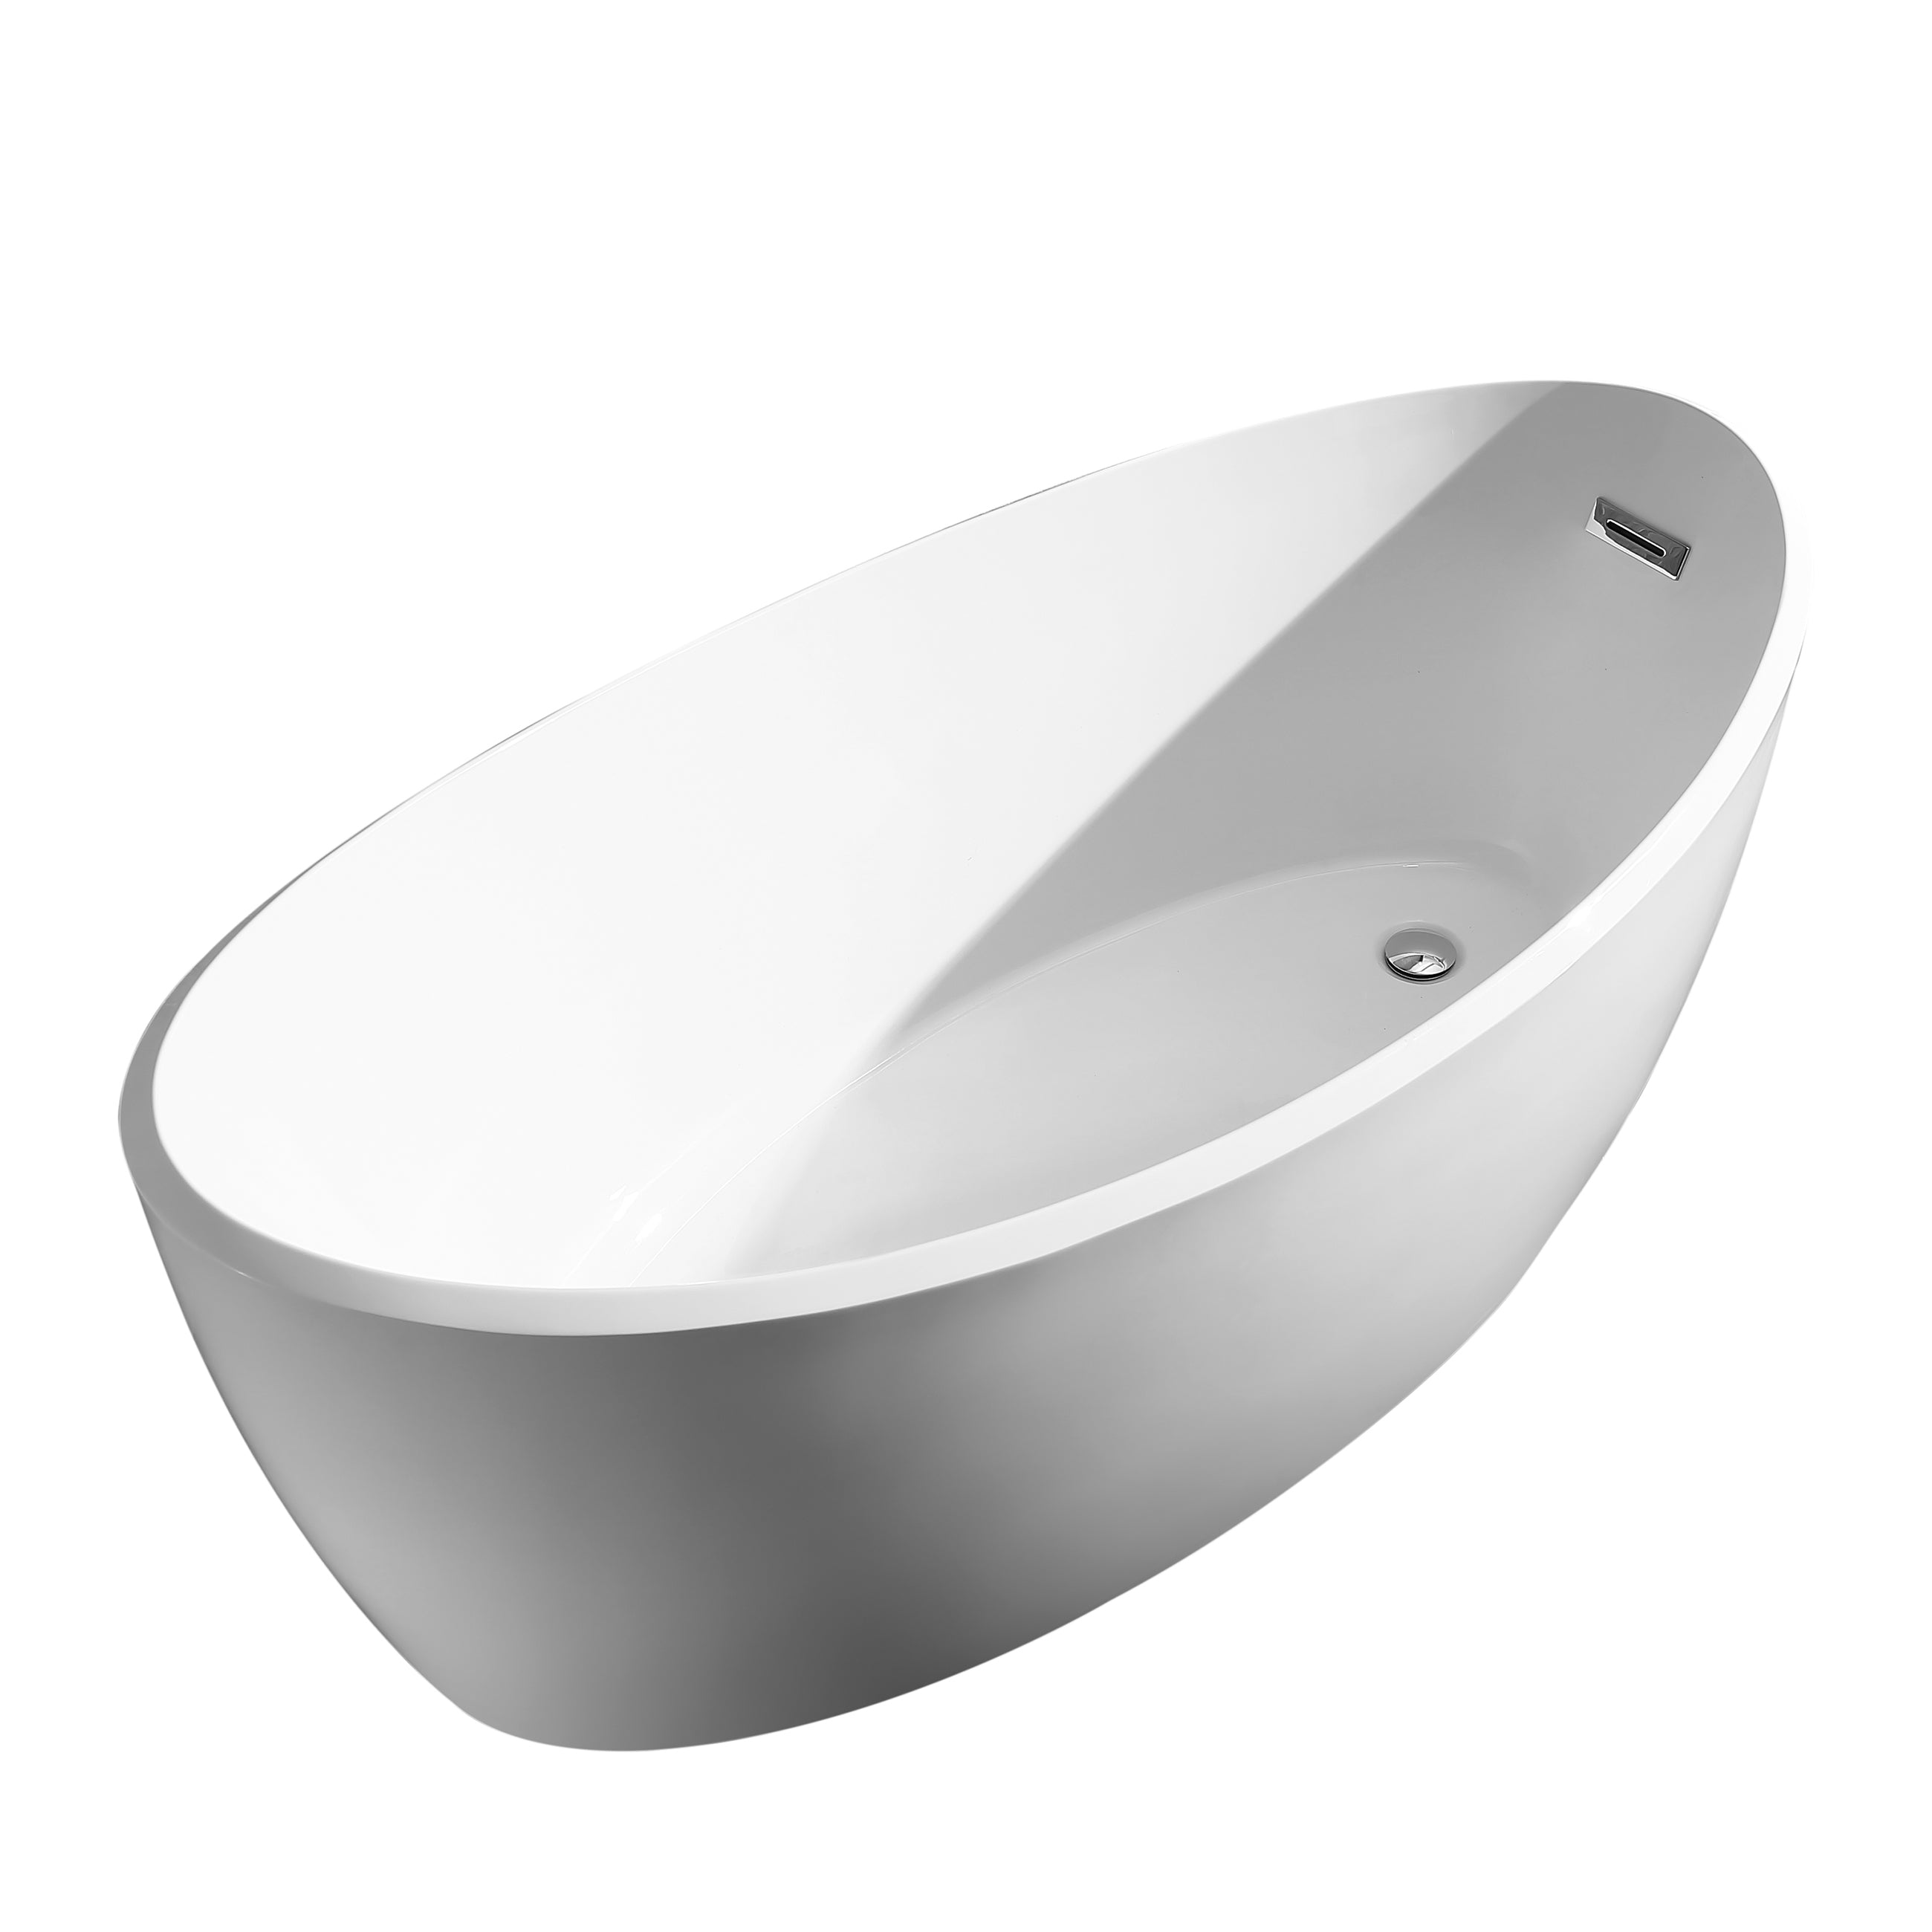 Dreamwerks 66.9" Acrylic Flatbottom Oval Bathtub in Glossy White - Dreamwerks